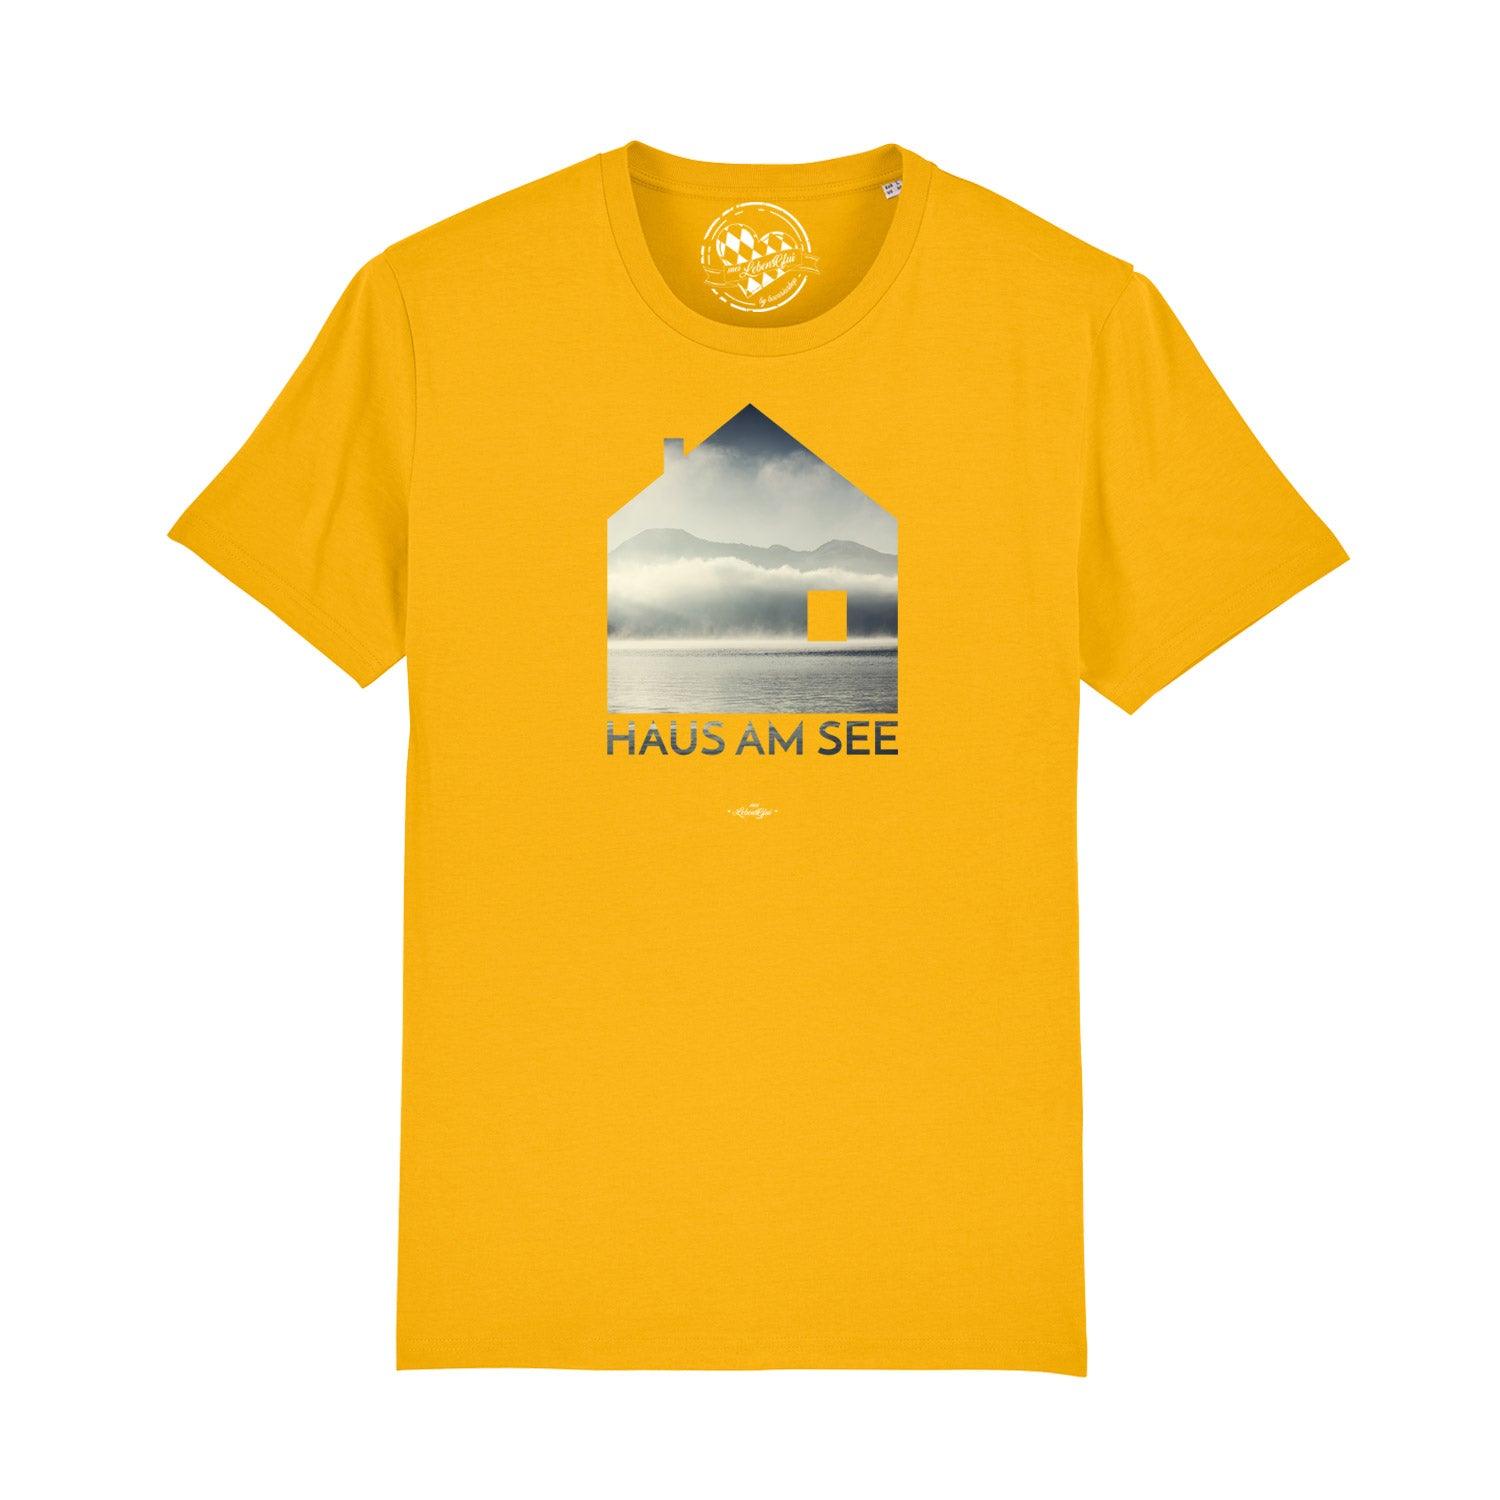 Herren T-Shirt "Haus am See" - bavariashop - mei LebensGfui